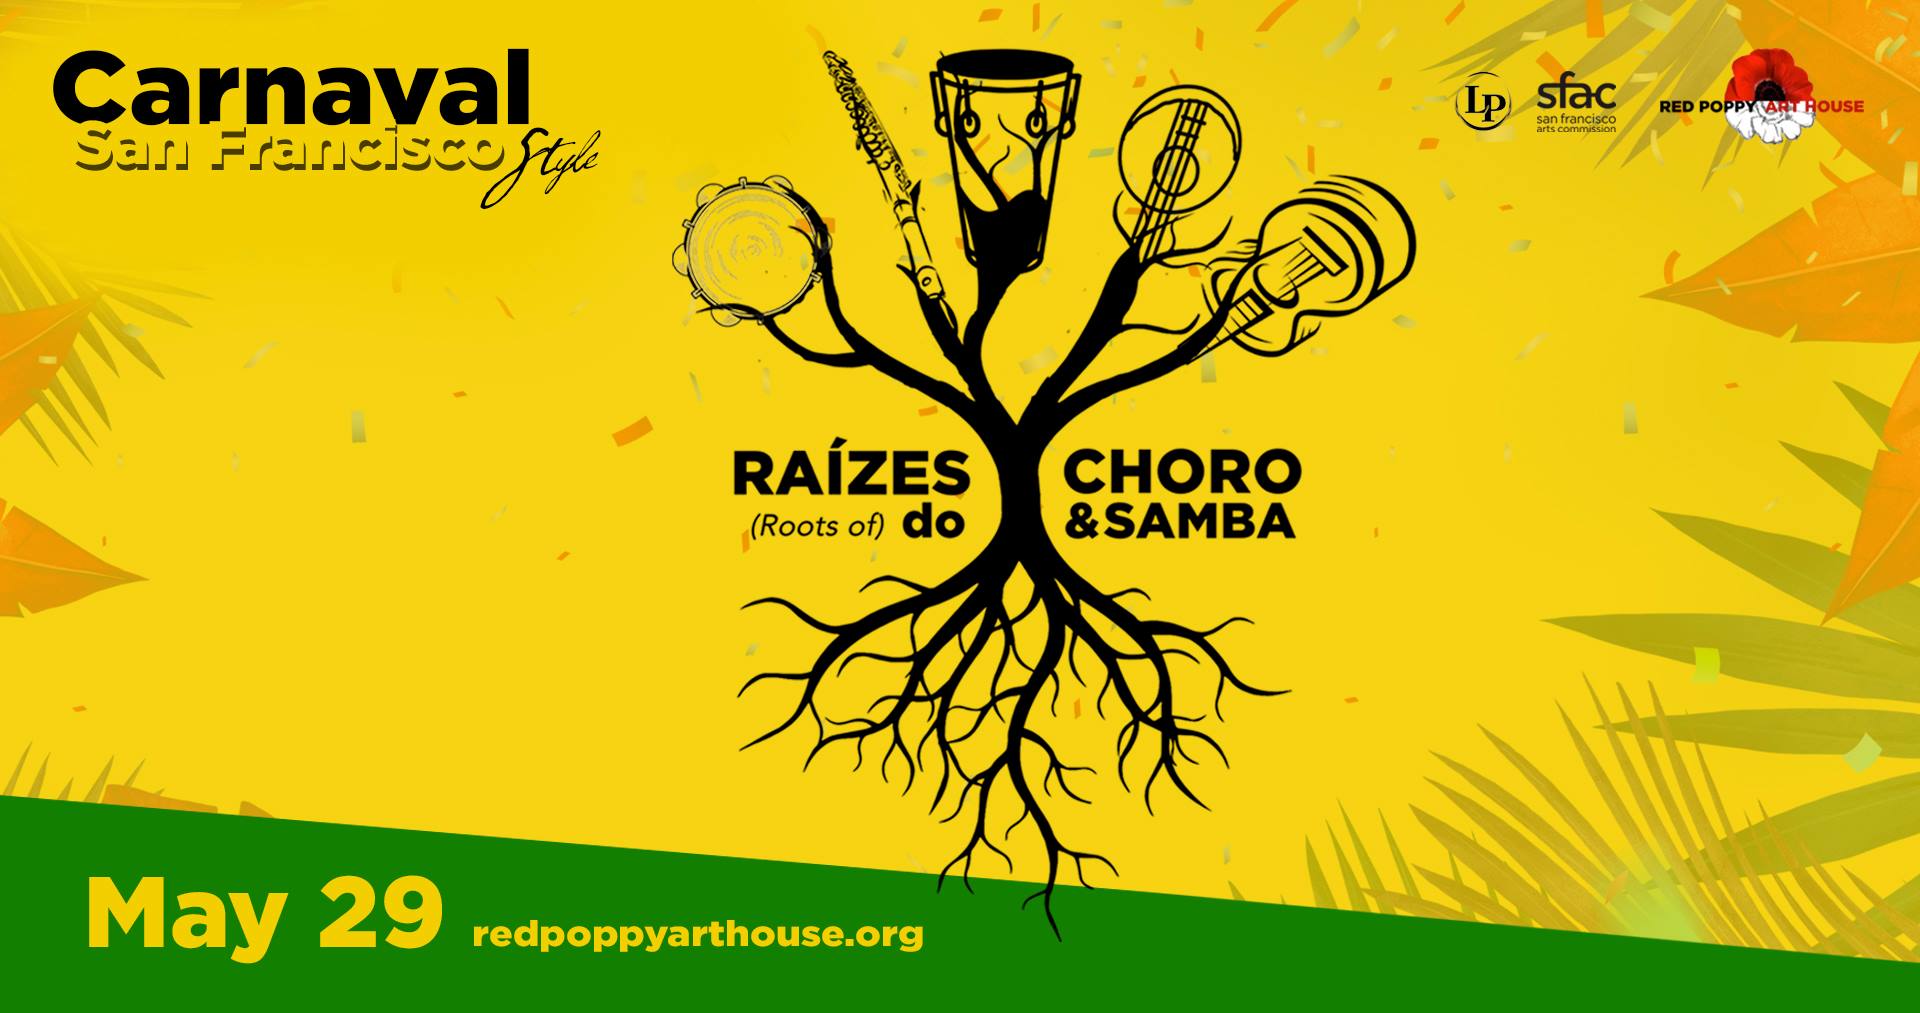 Celebrating CARNAVAL SAN FRANCISCO 2021 with Raizes do Choro e Samba